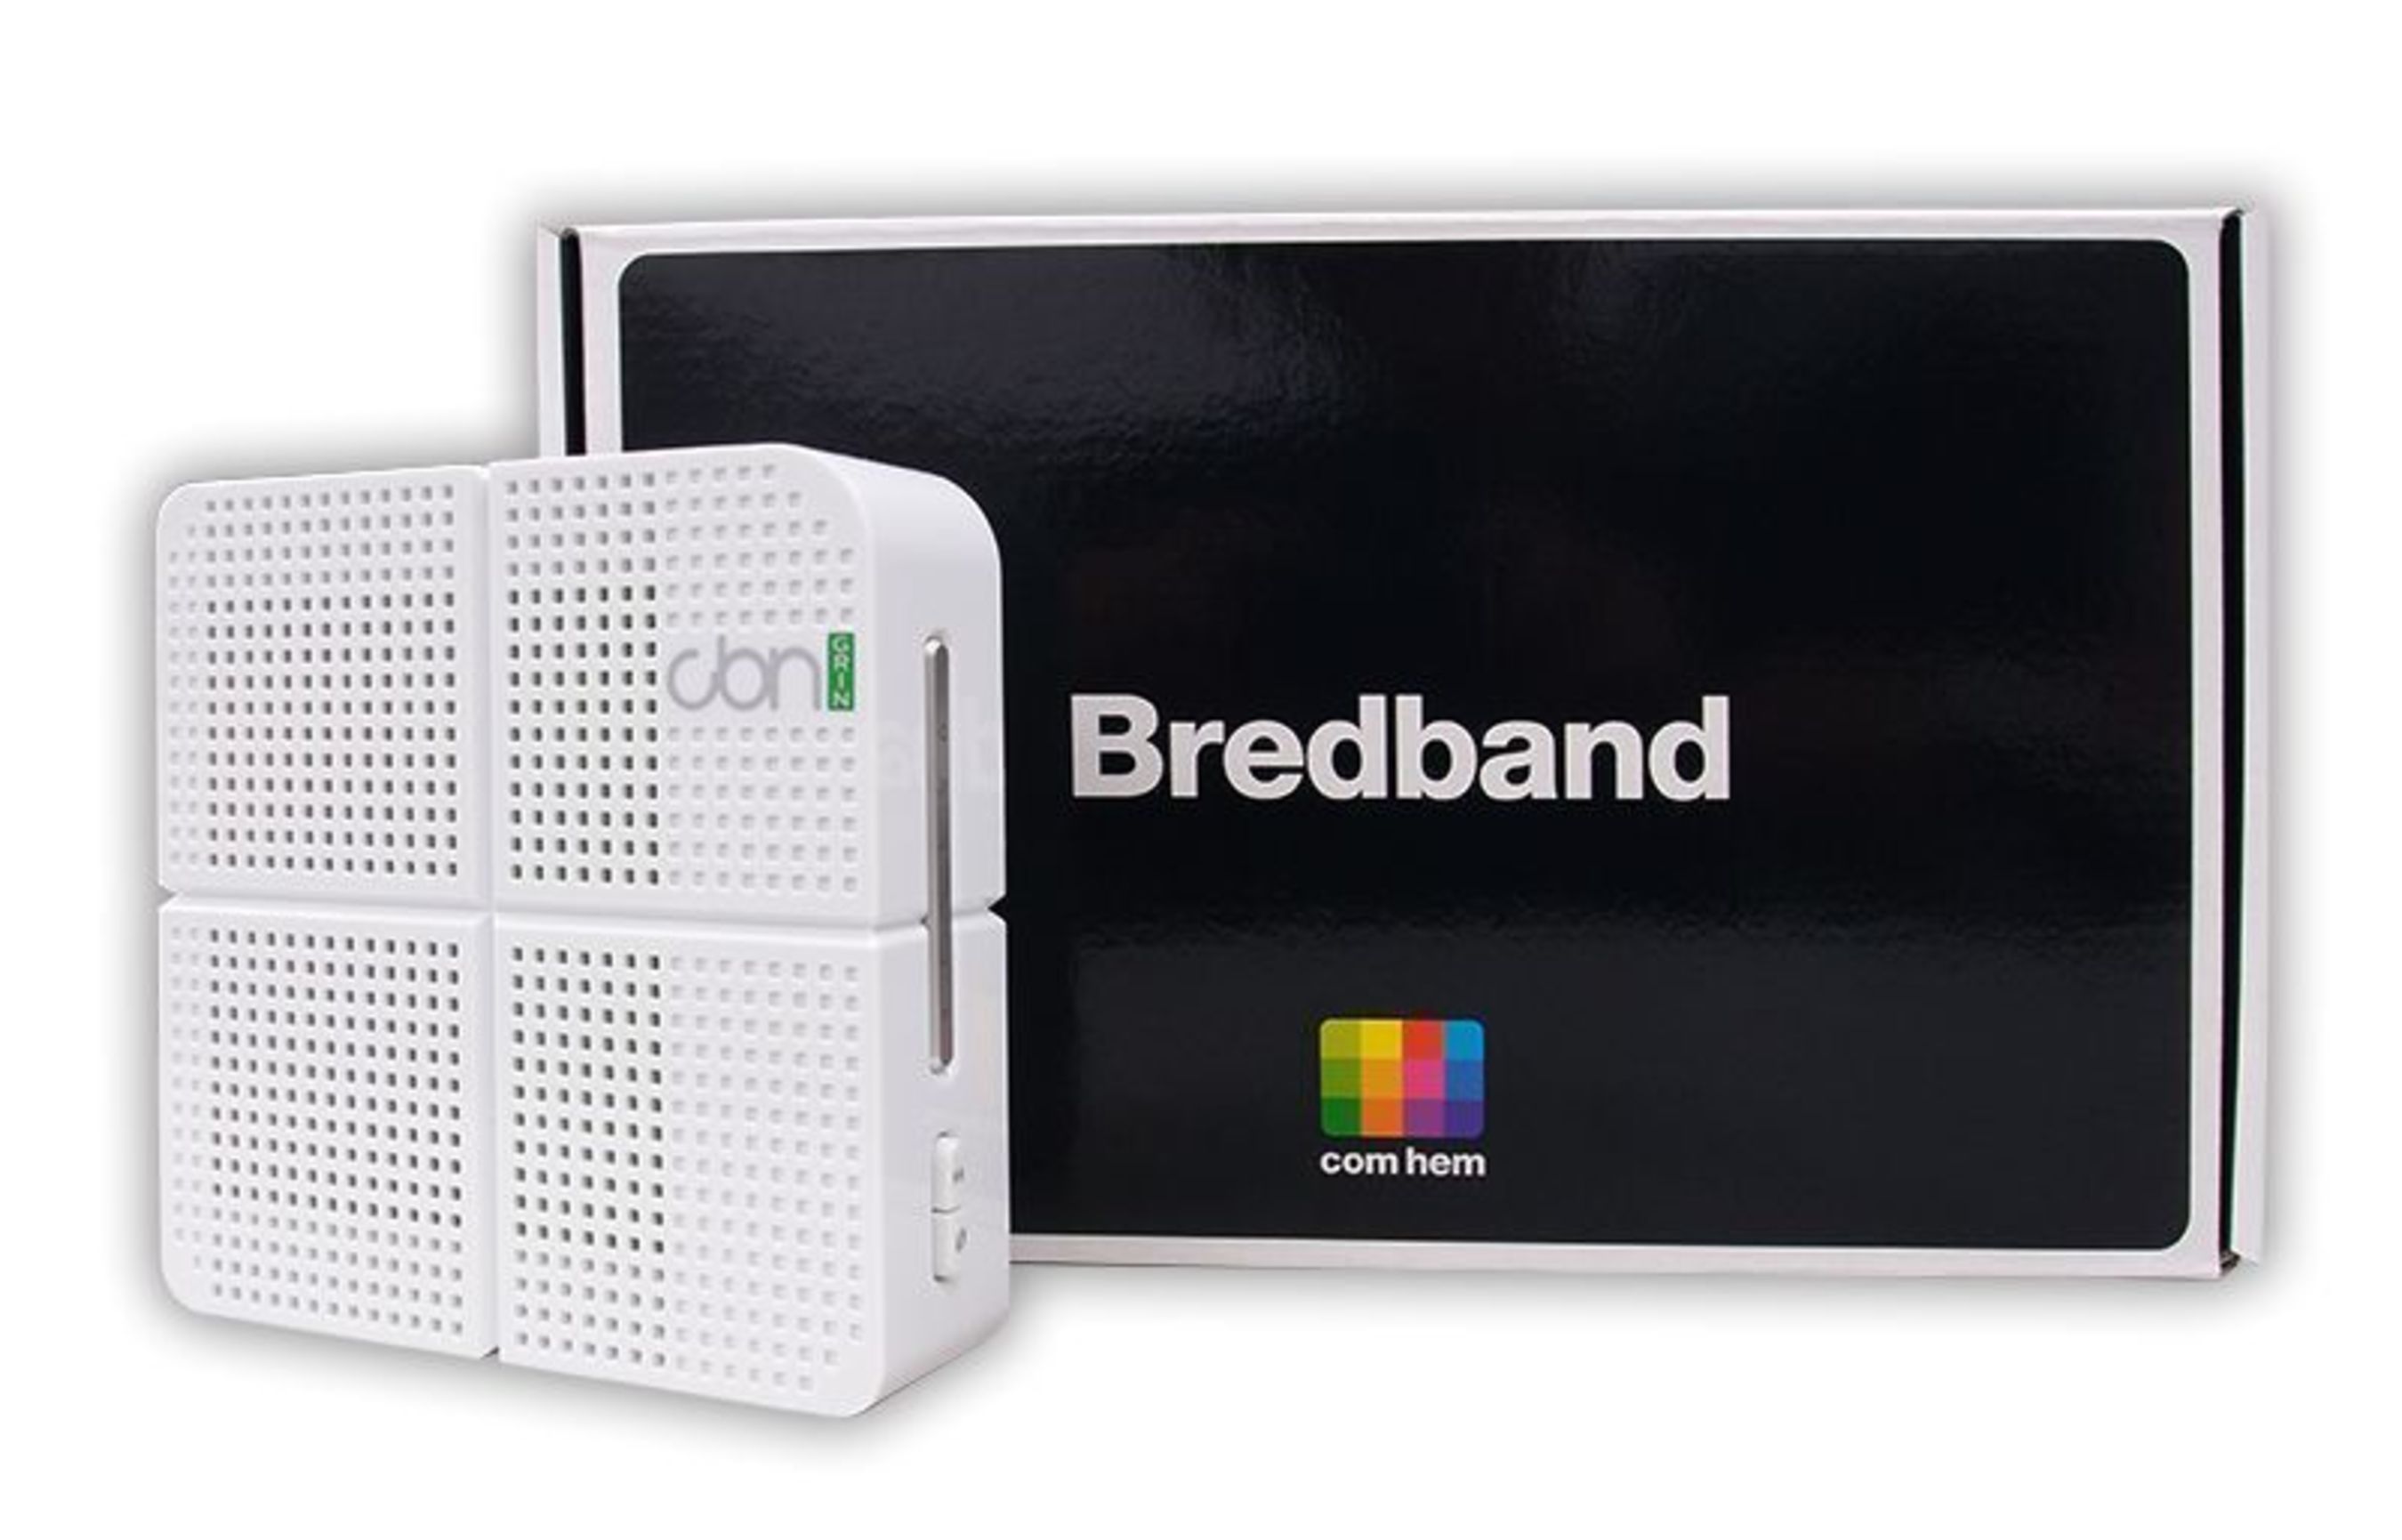 Uitdrukkelijk Bel terug tunnel Swedish MSO Com Hem Chooses Compal Broadband Networks Advanced Cable  Gateway for its New High Speed Broadband Service Roll-out